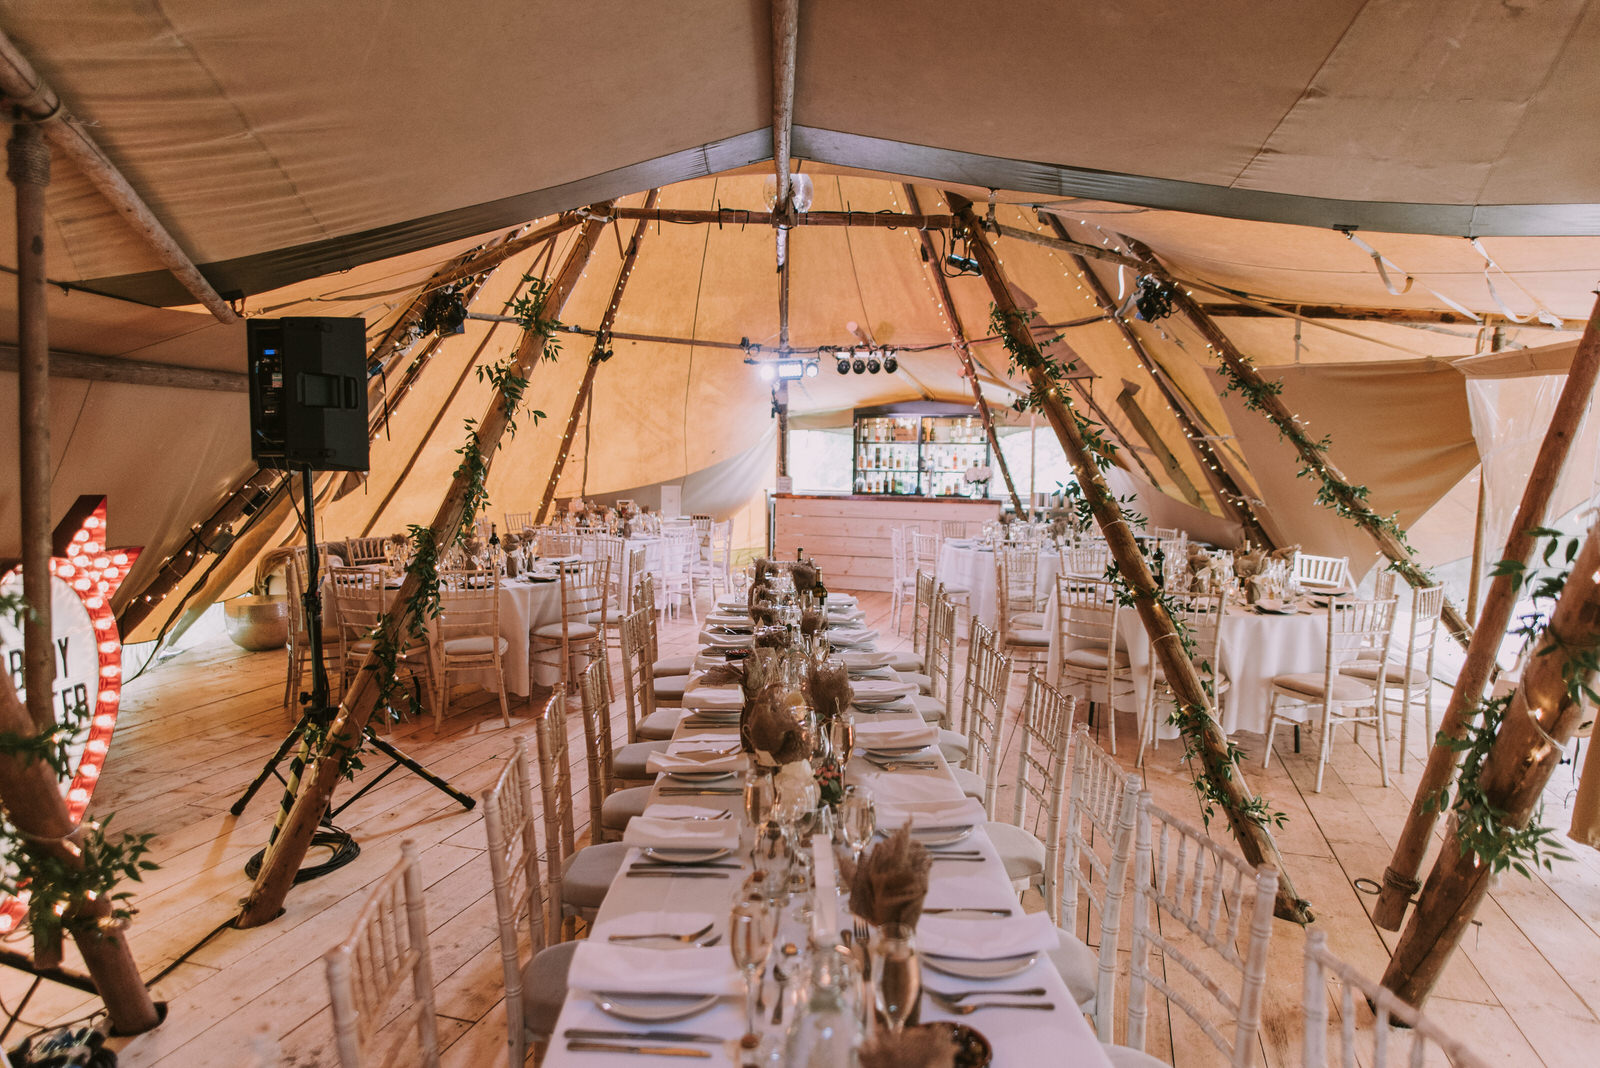 Festival Style Wedding Tipi Tents